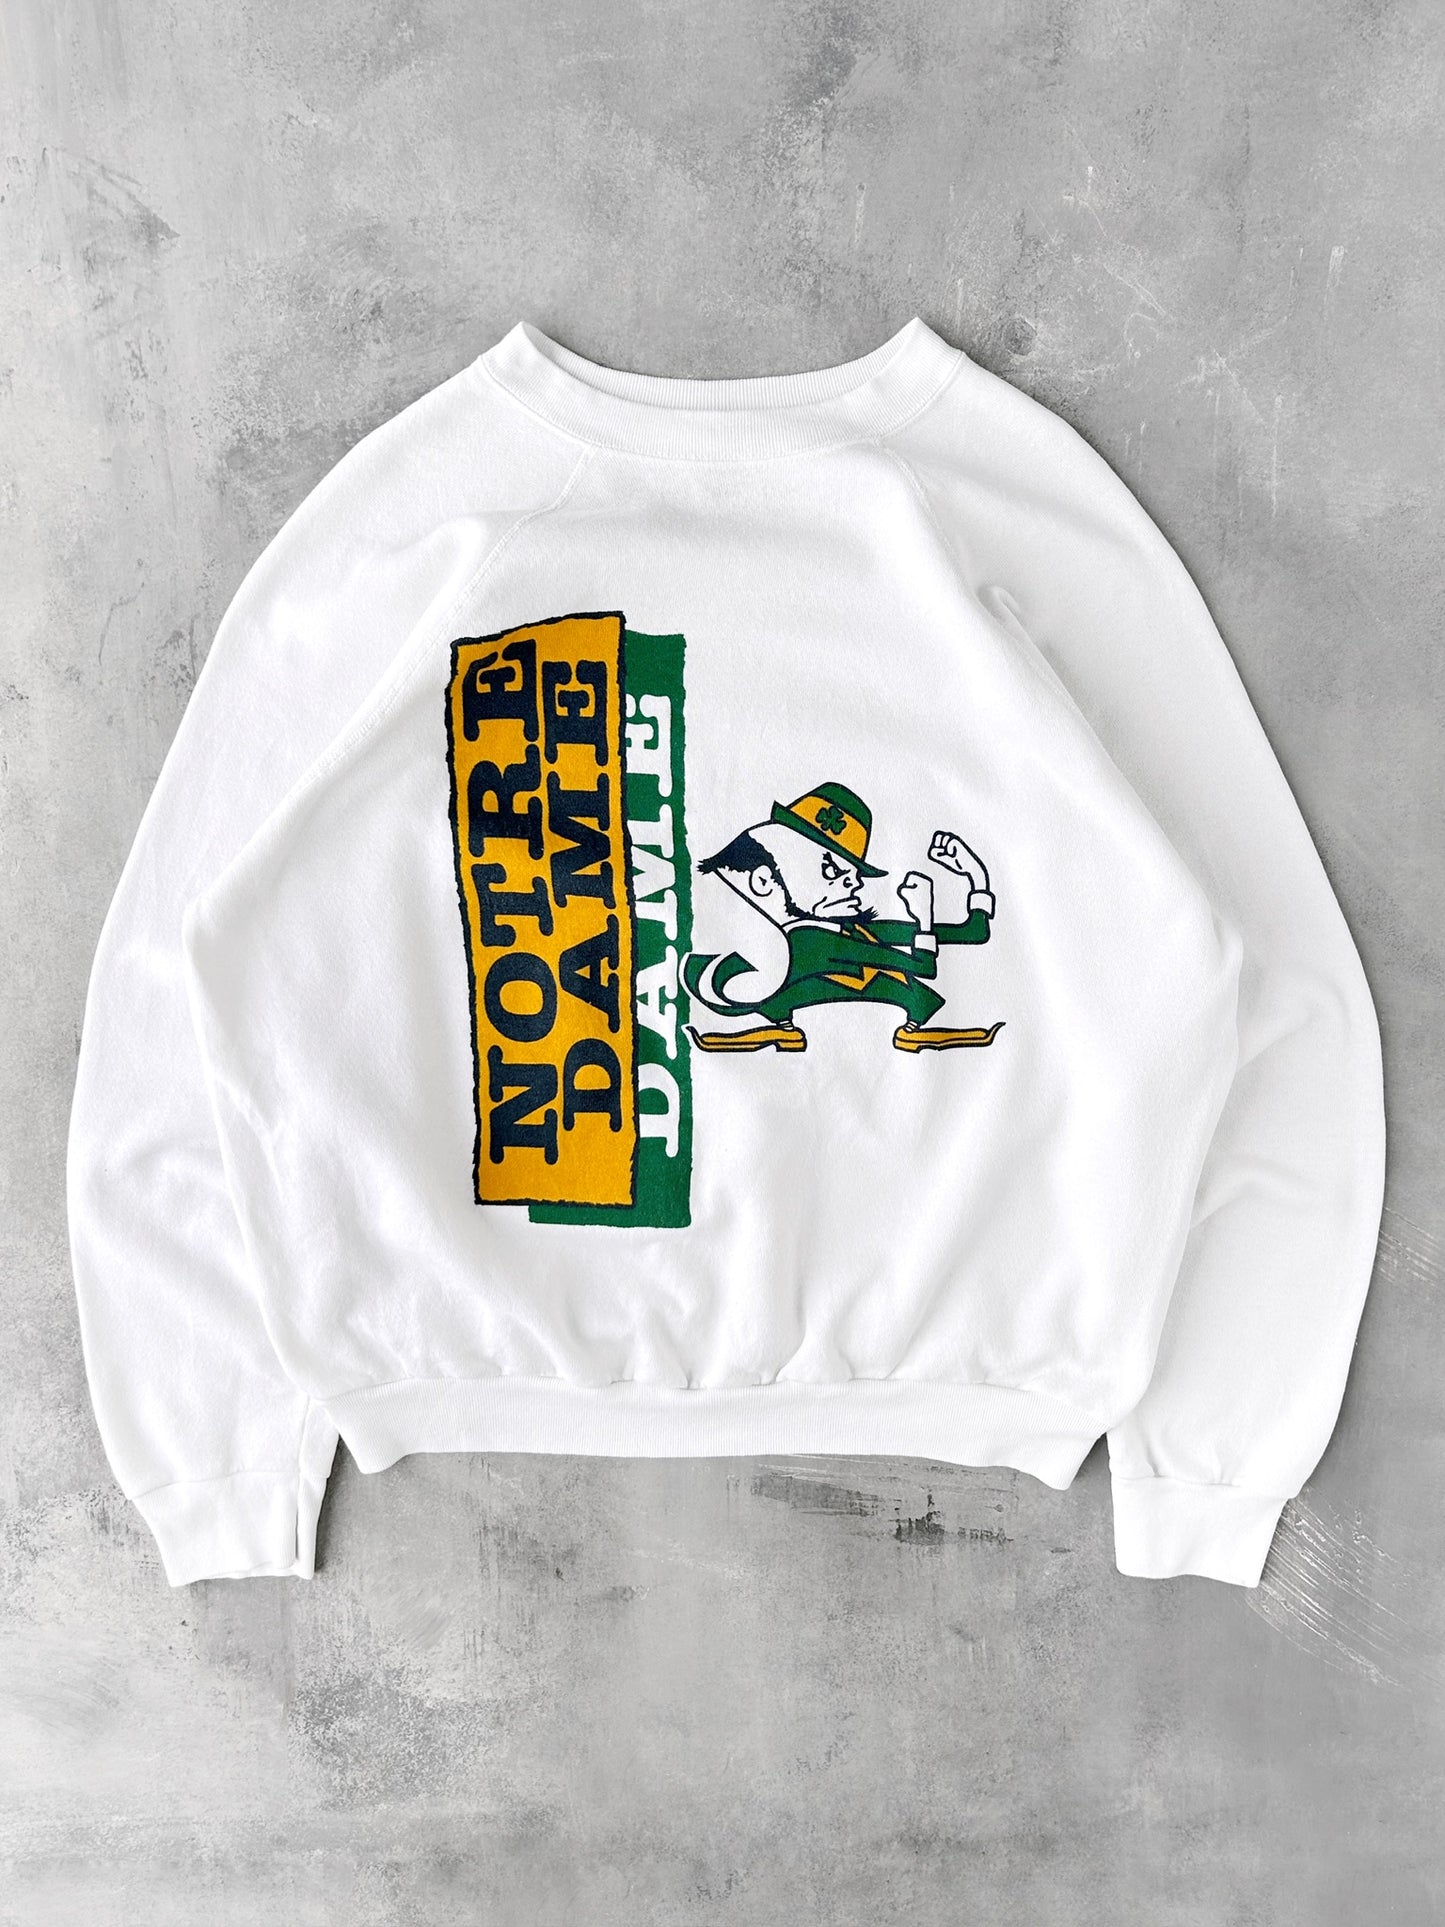 Notre Dame Sweatshirt 80's - XL